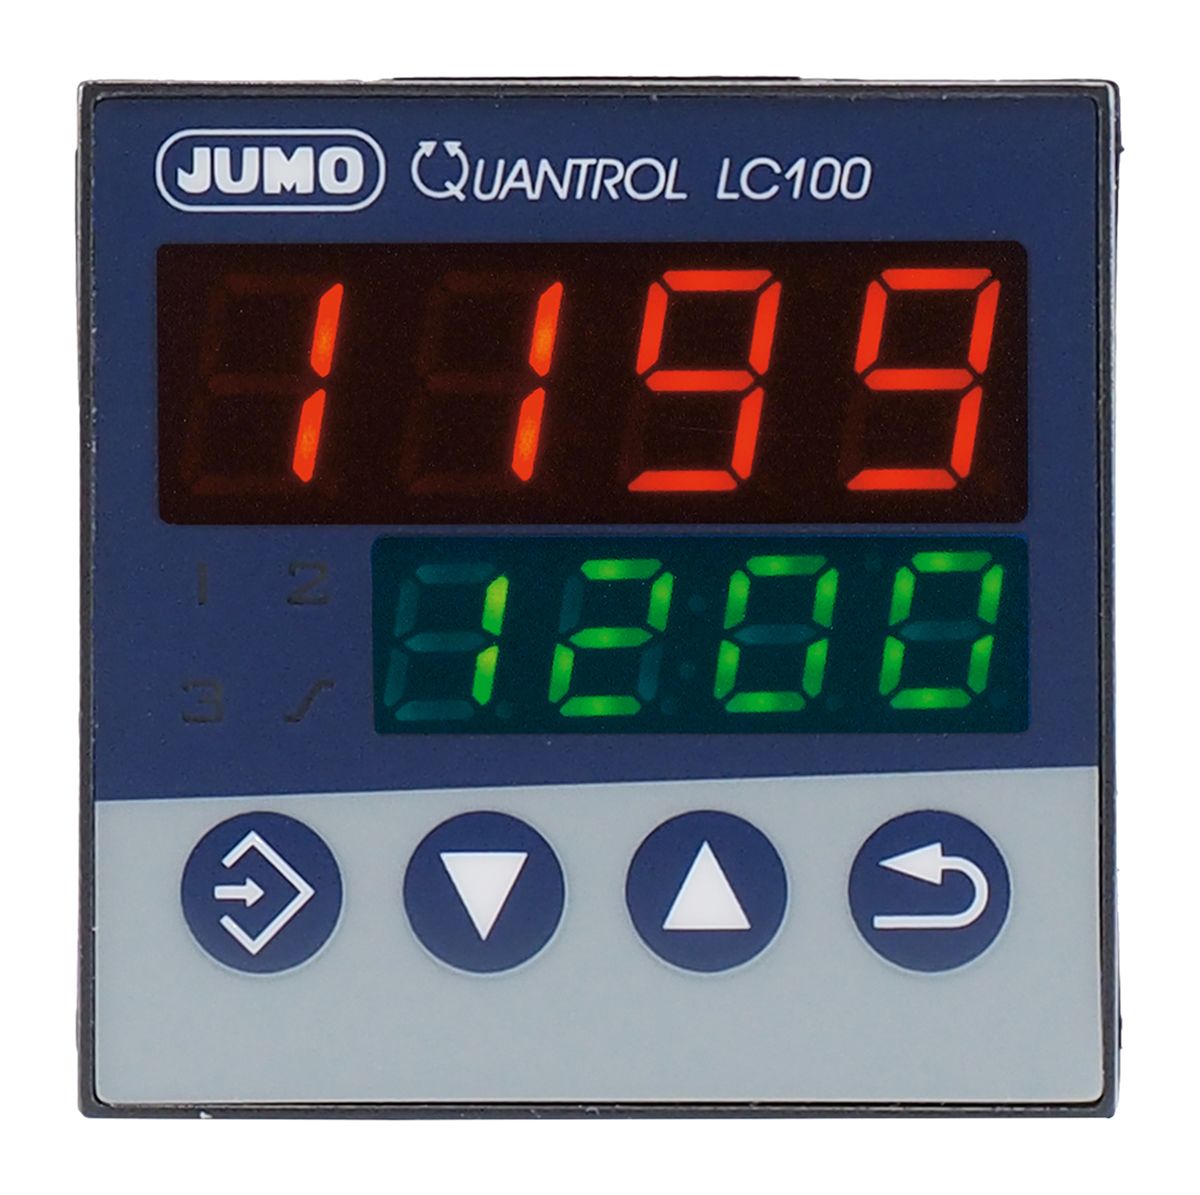 Jumo QUANTROL PID Temperaturregler, 1 x Relais Ausgang/ Universal Eingang, 110 →240 V ac, 48 x 48mm